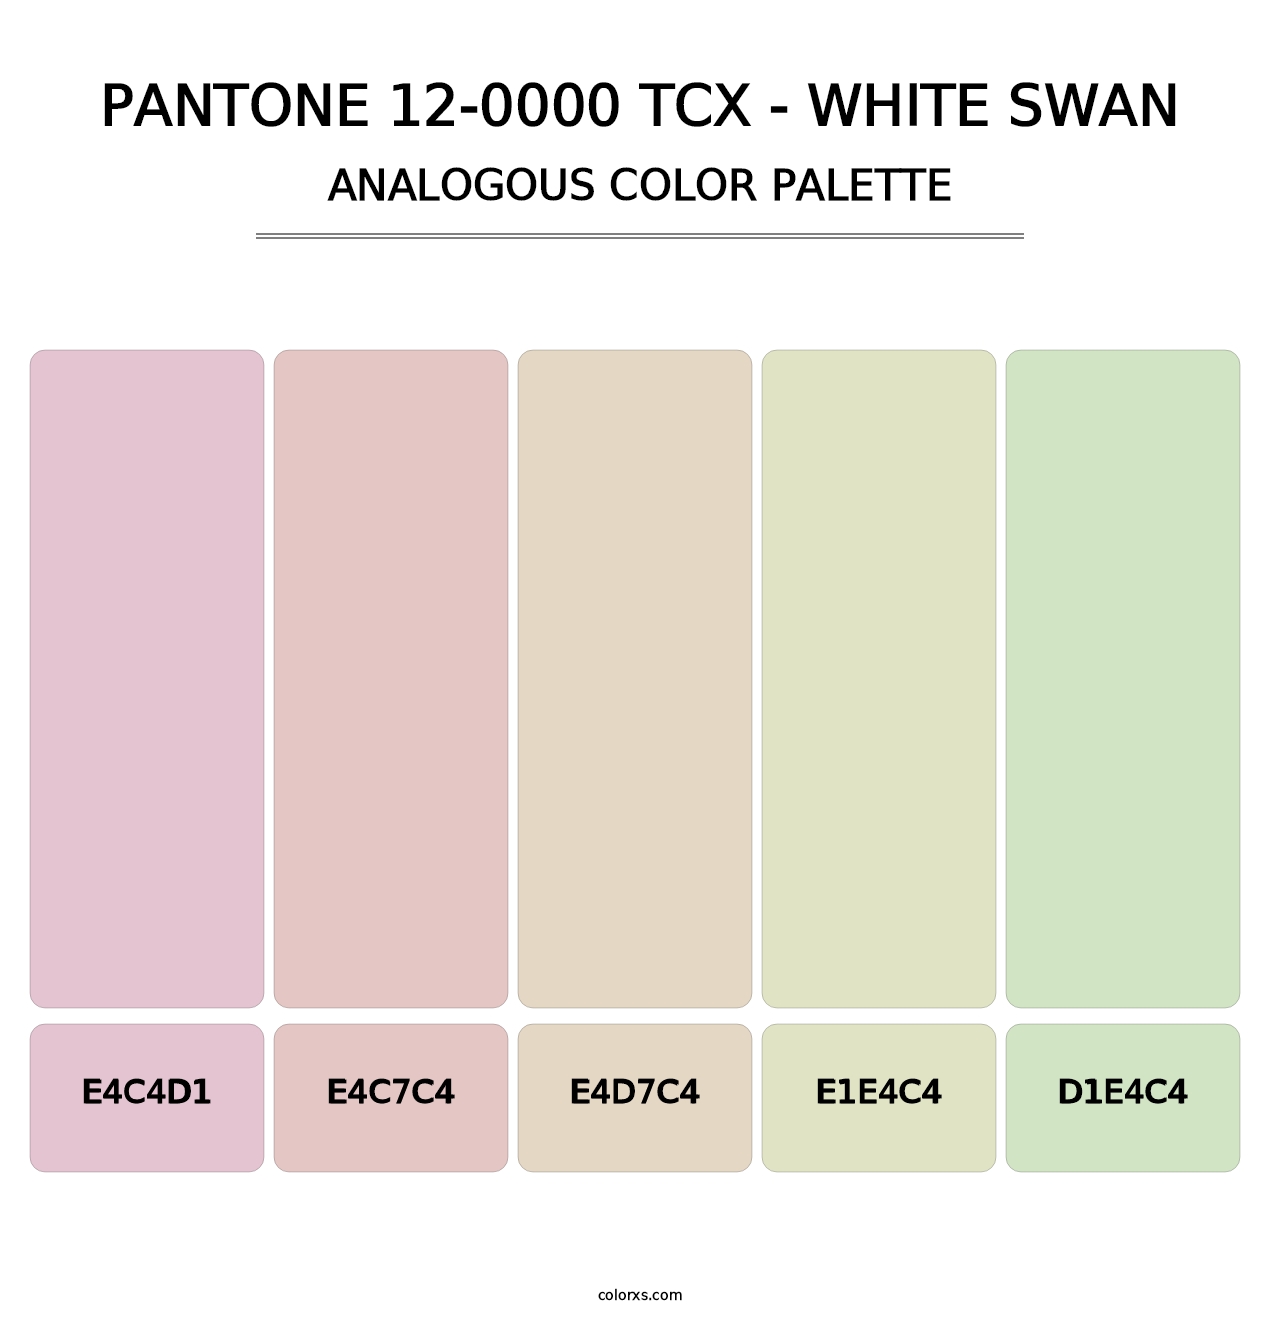 PANTONE 12-0000 TCX - White Swan - Analogous Color Palette